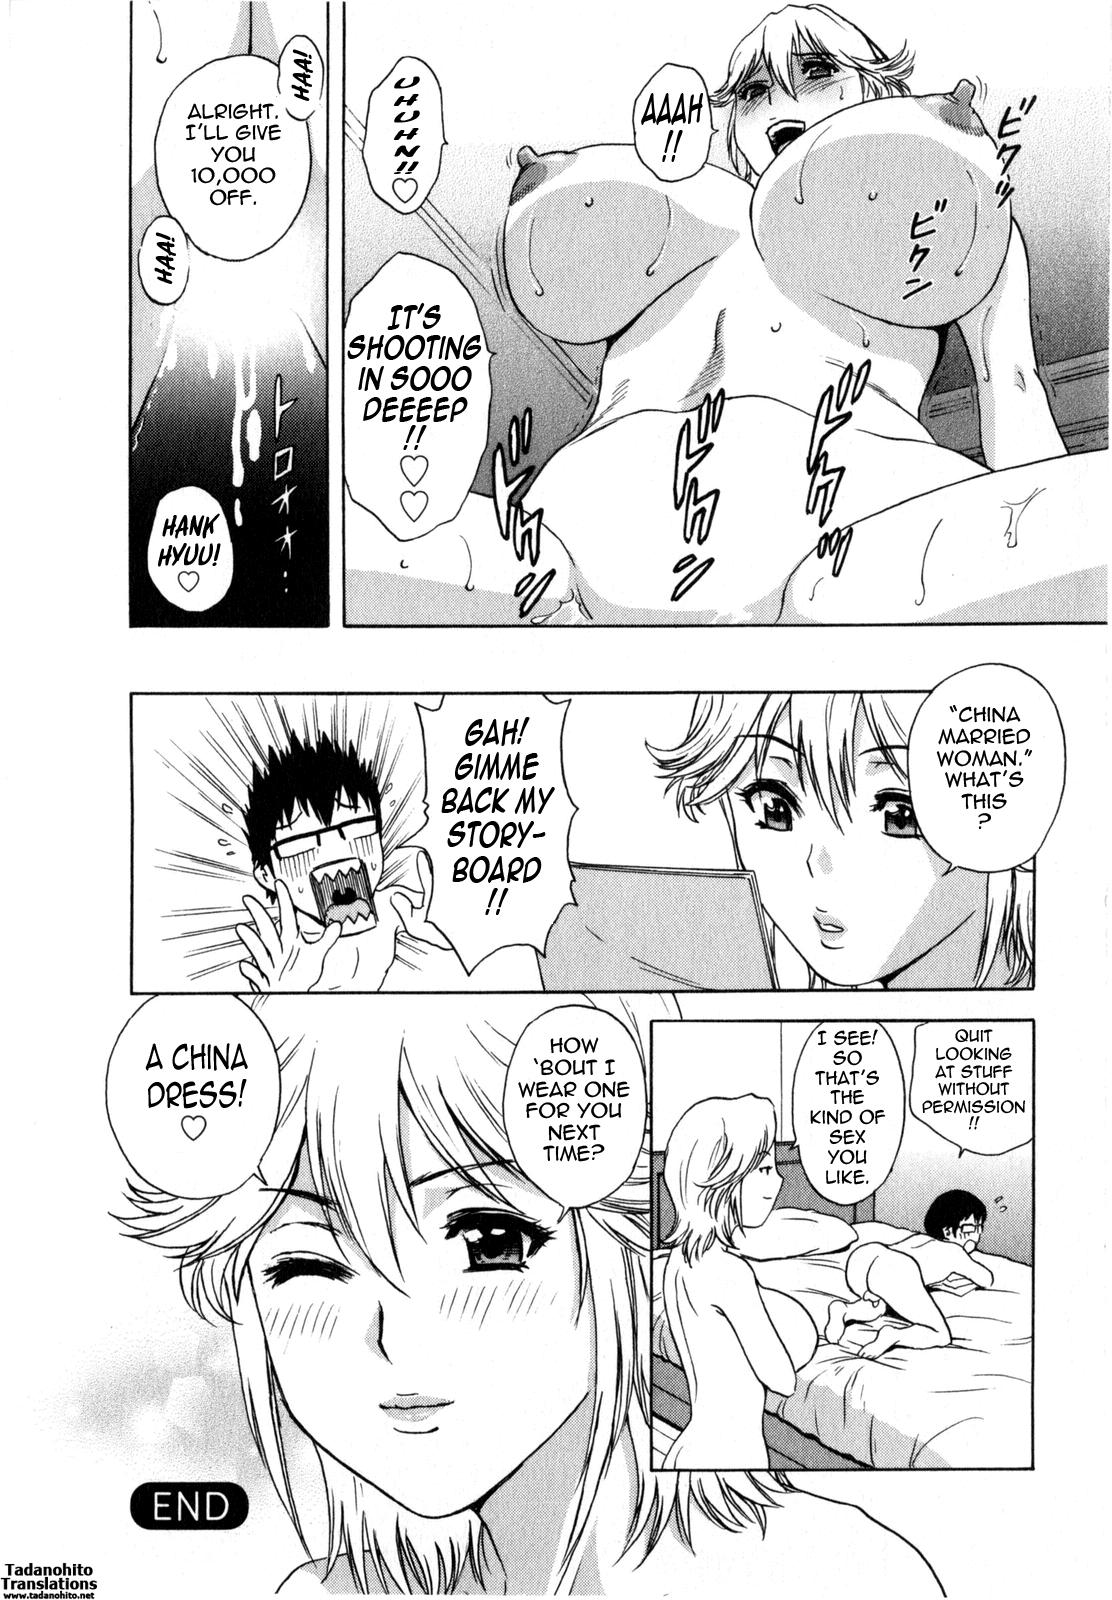 [Hidemaru] Life with Married Women Just Like a Manga 2 - Ch. 1-7 [English] {Tadanohito} 63